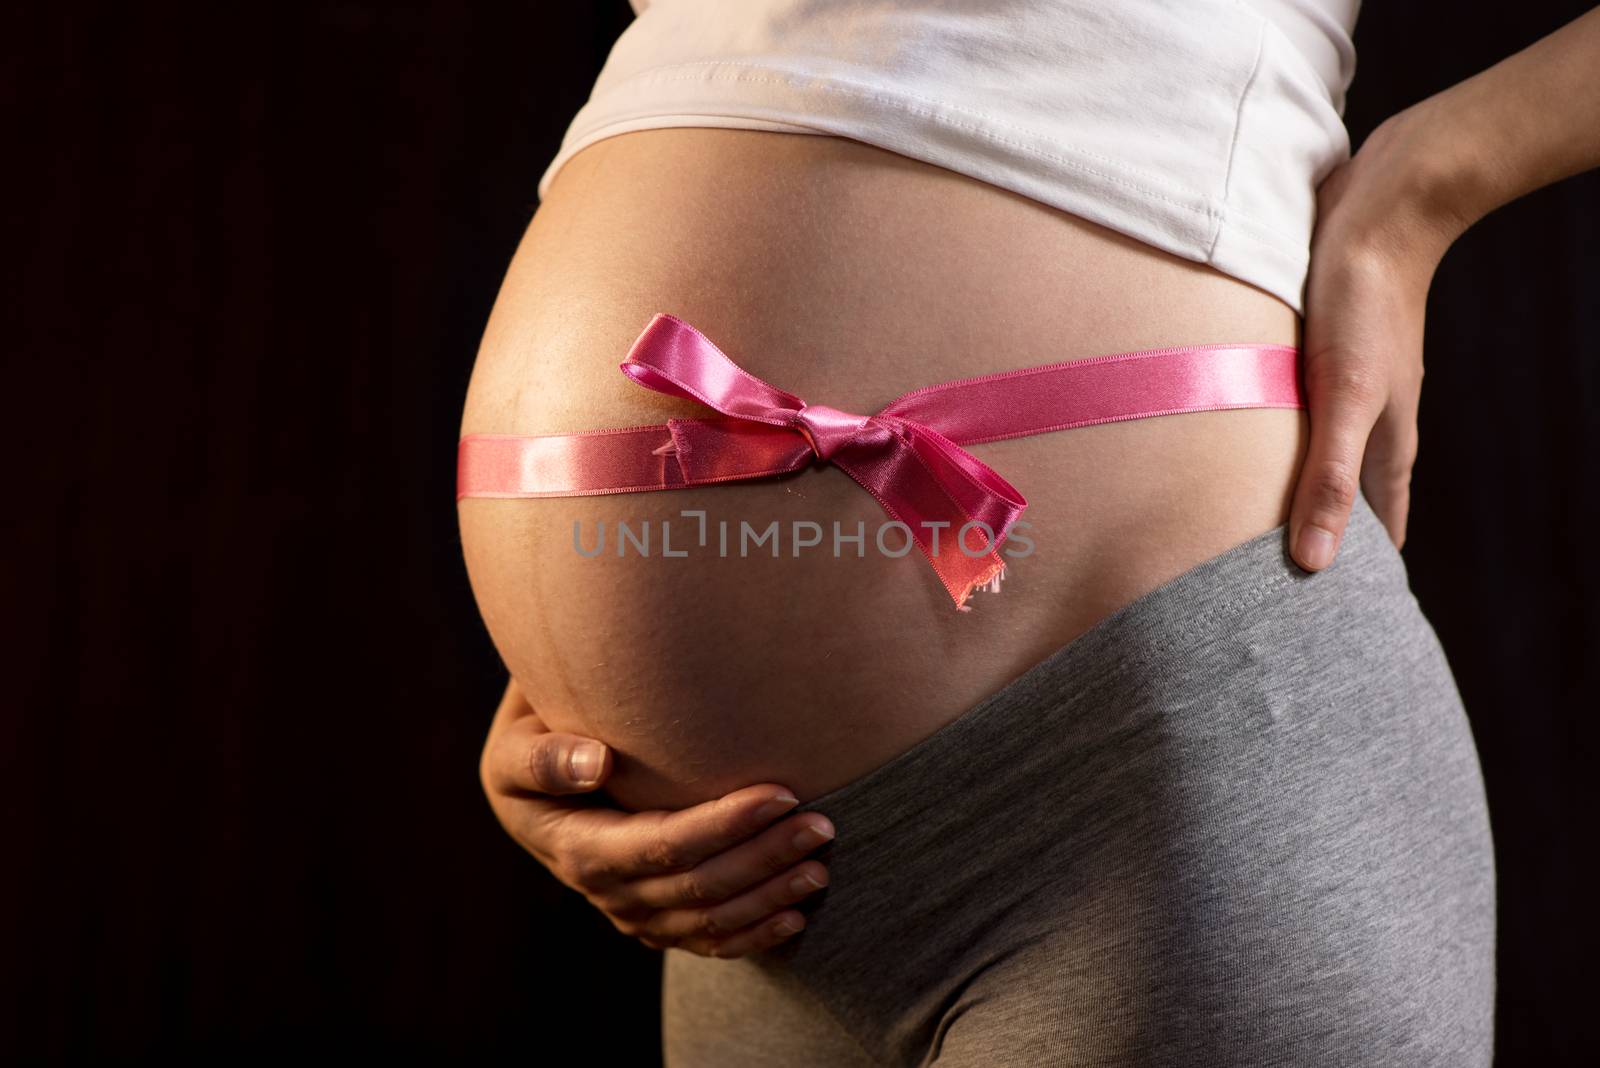 Pregnant Woman by MilanMarkovic78